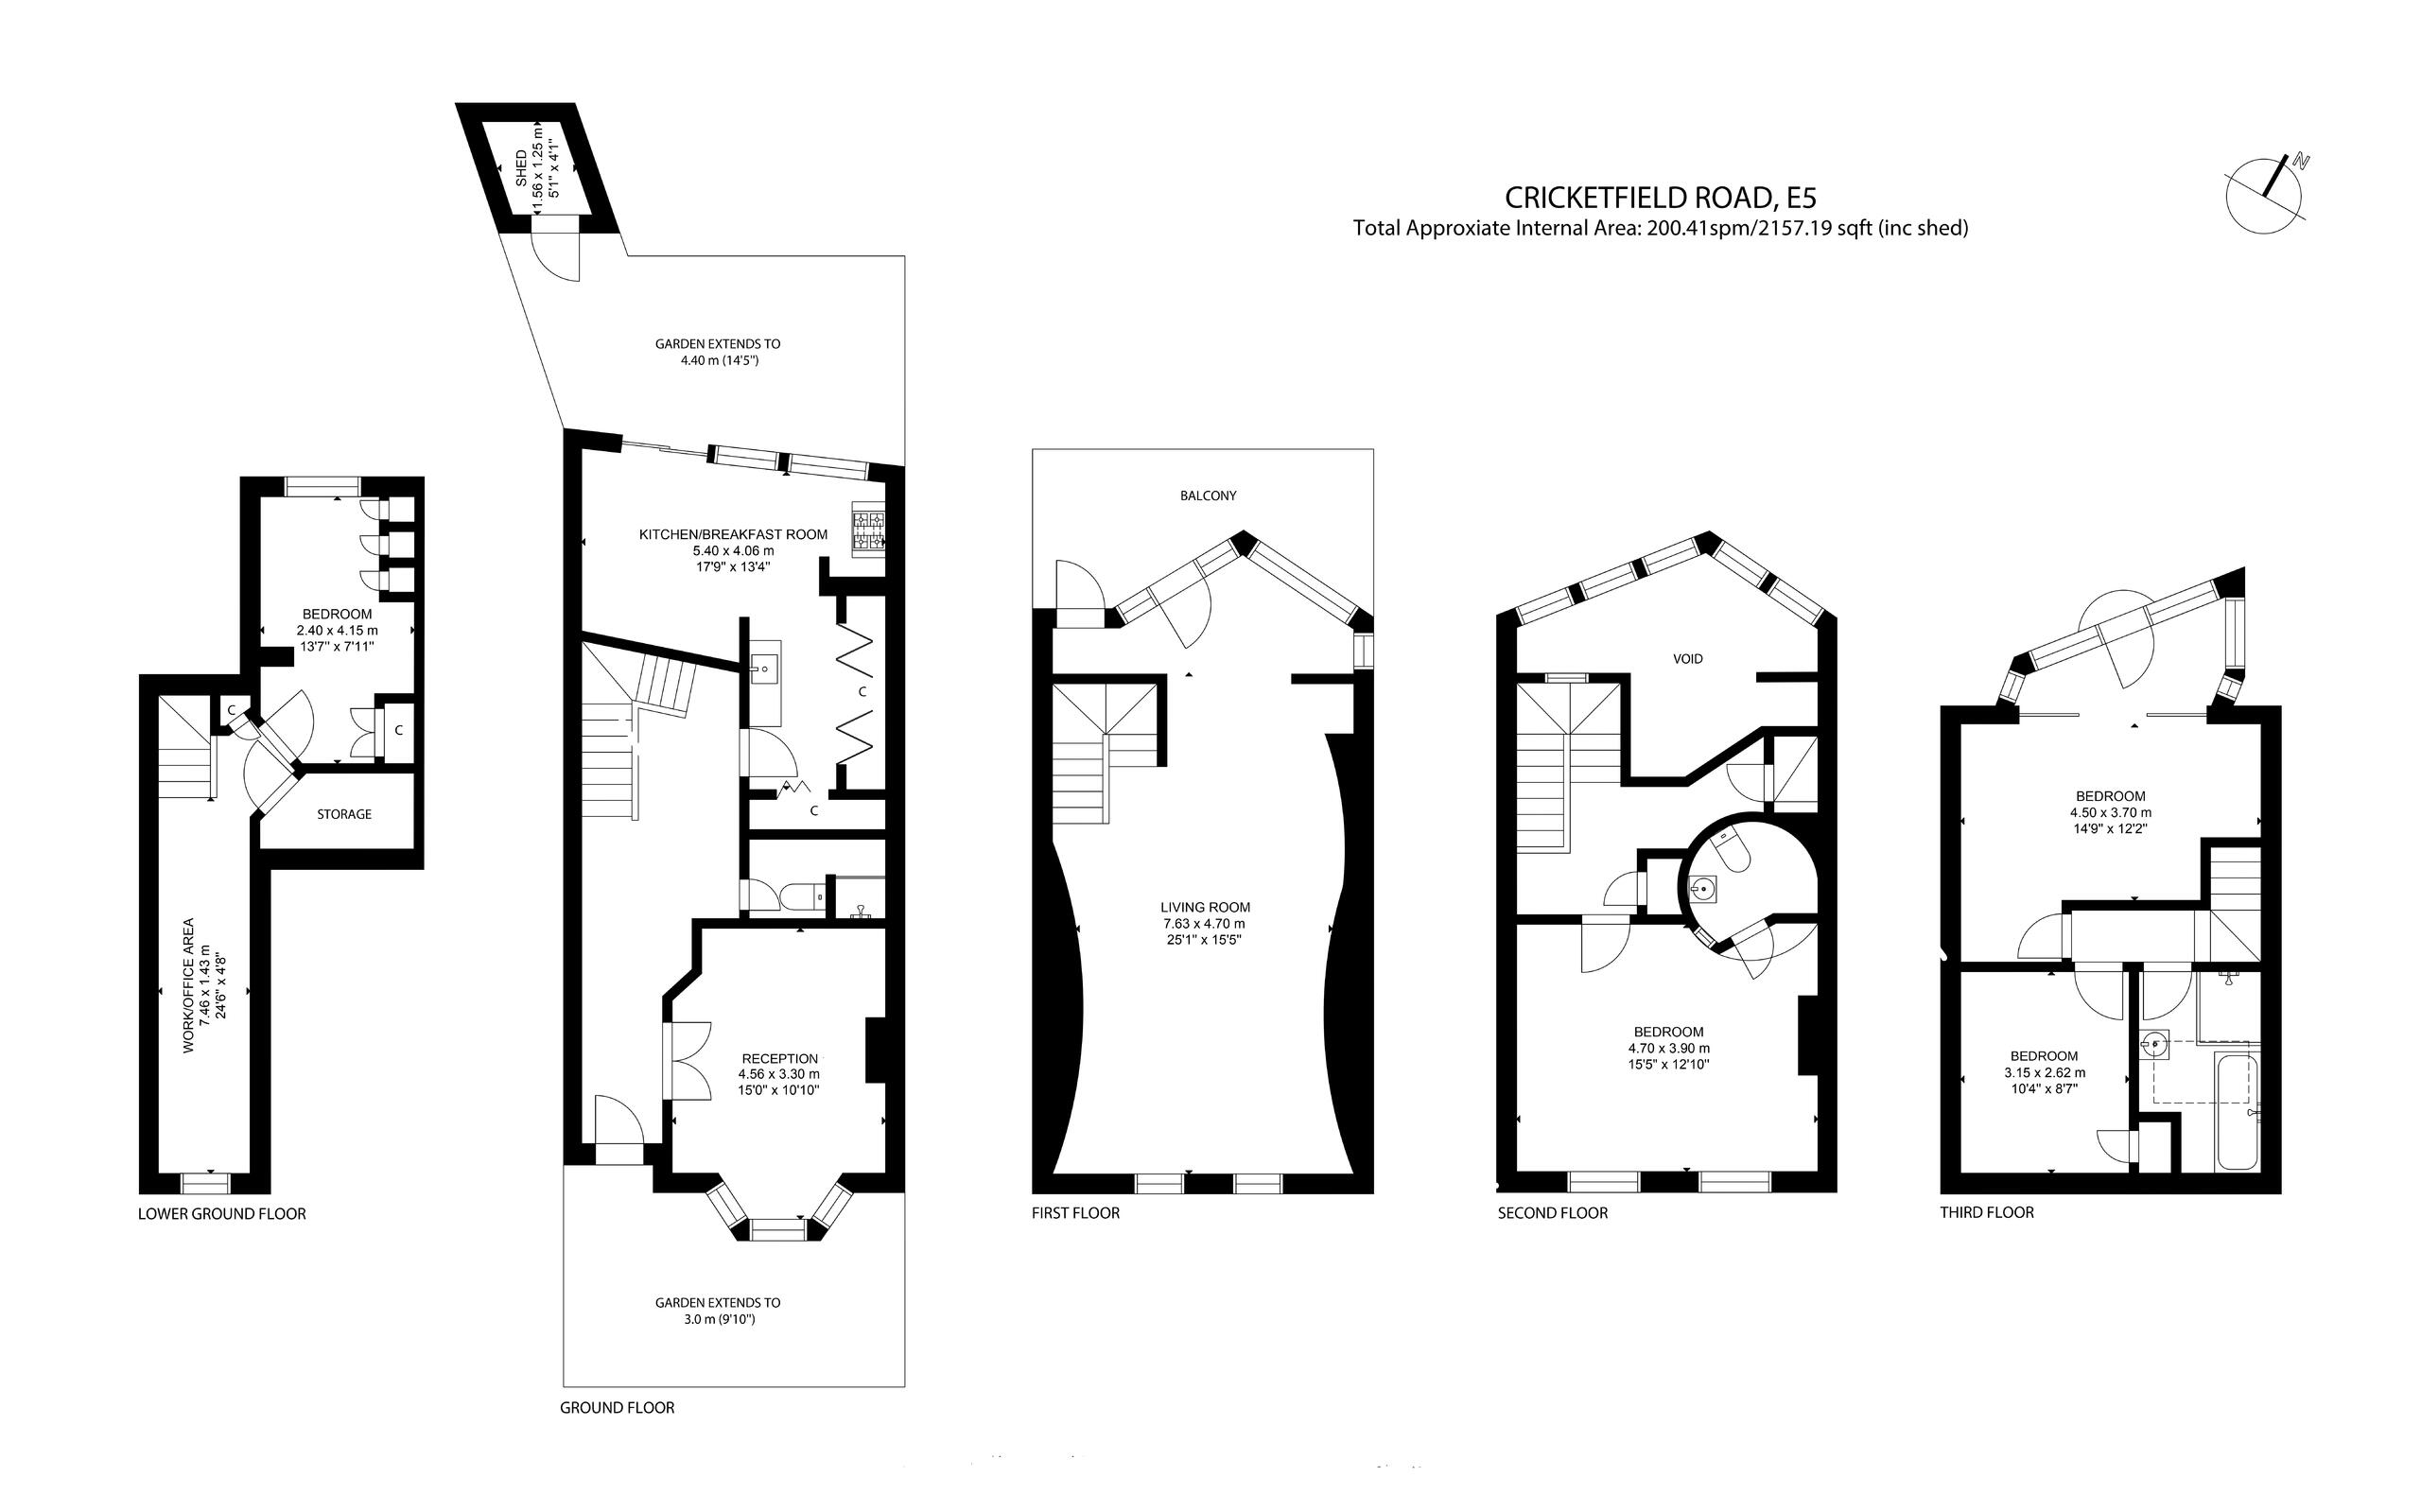 4 bed terraced house for sale in Cricketfield Road, Hackney - Property floorplan